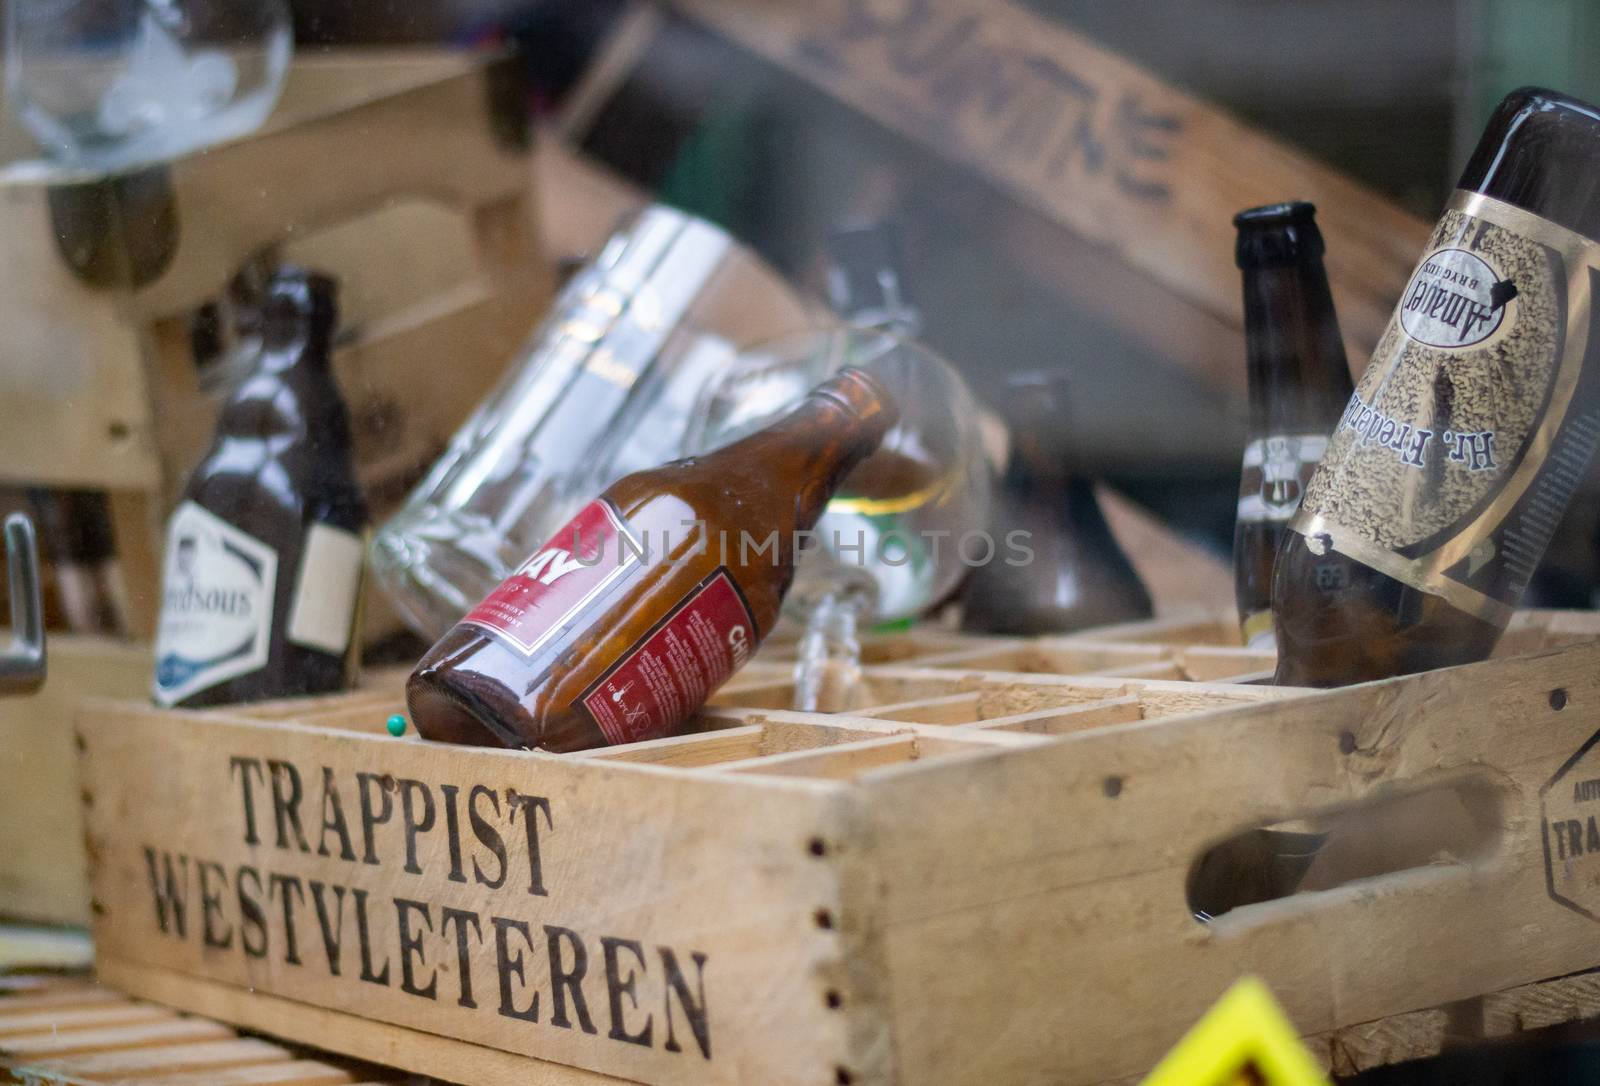 Belgian beer in a trappist Westvleteren crate on display by kb79